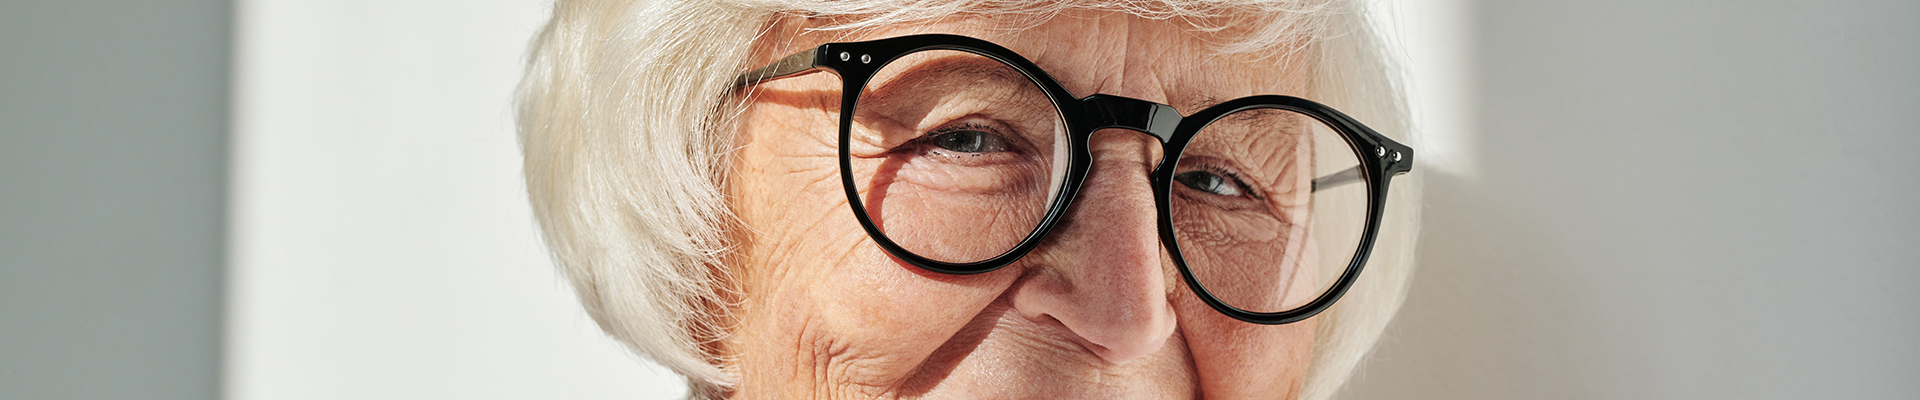 myopia and presbyopia offset